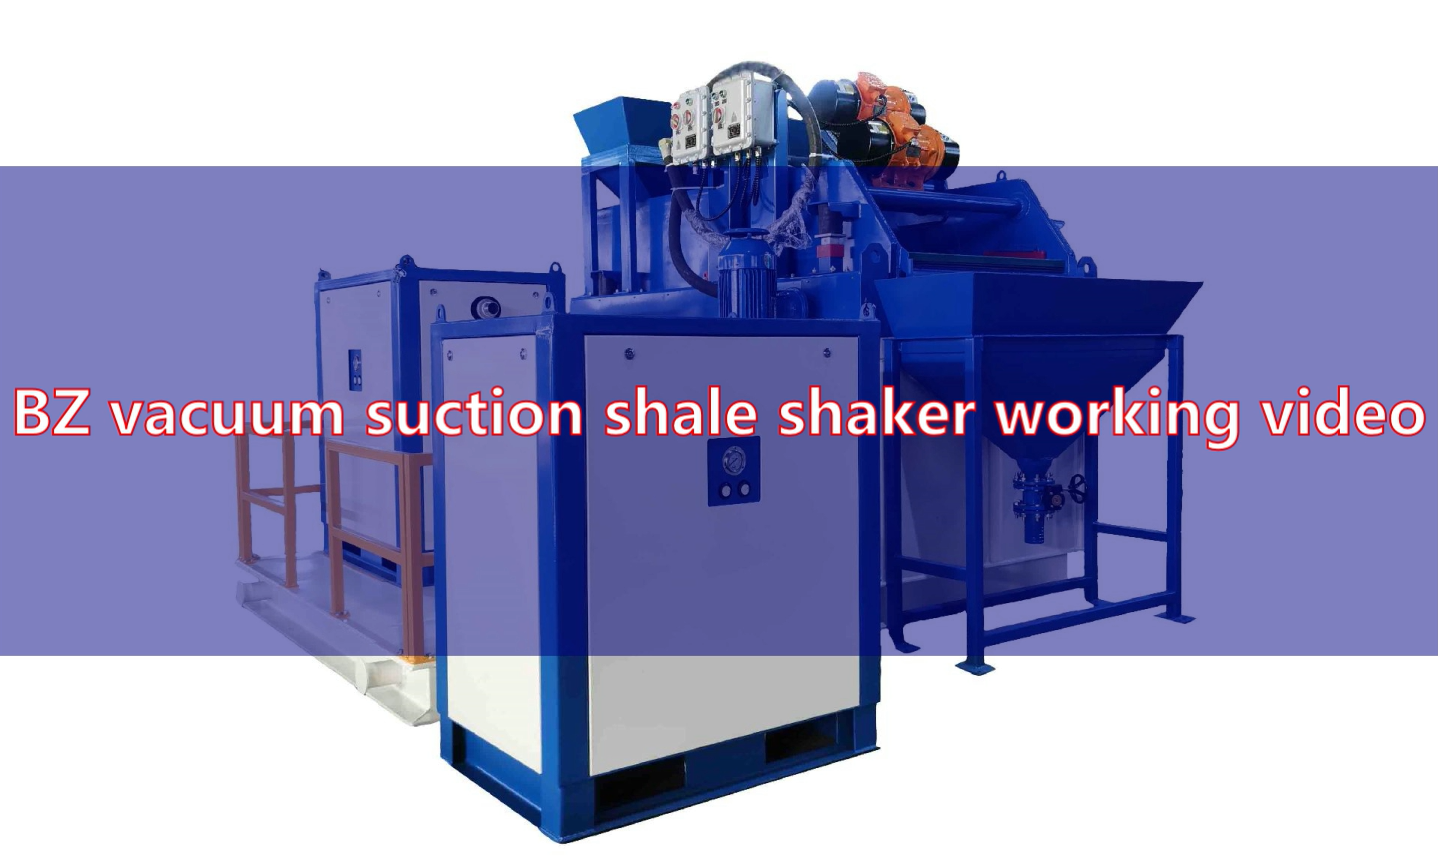 BZ vacuum suction shale shaker working video